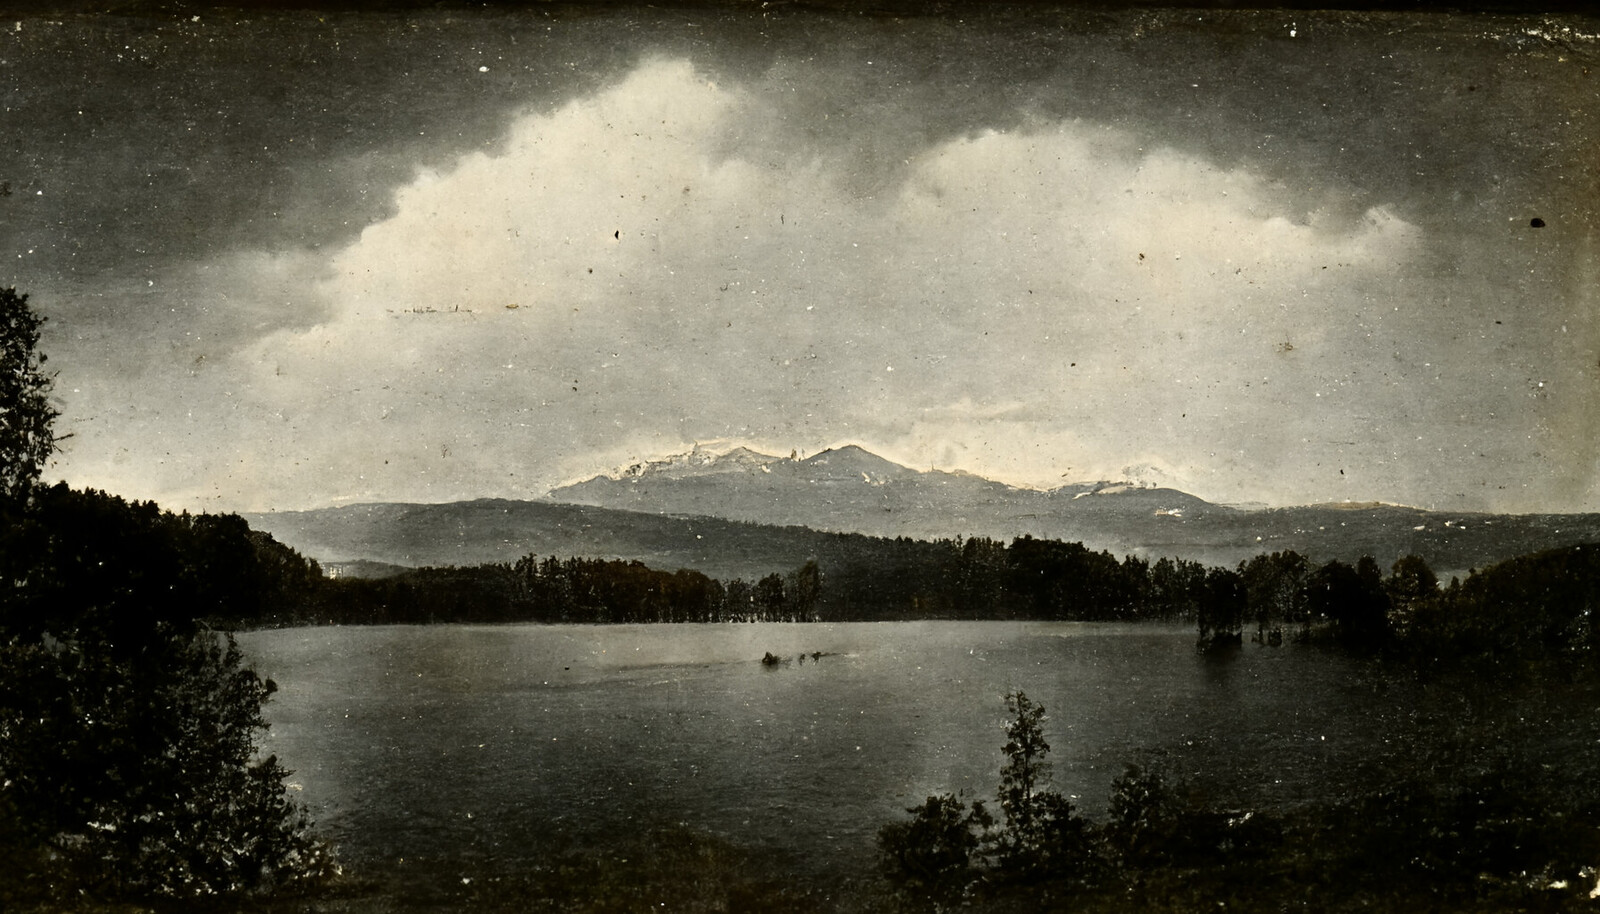 Lake Landscape #17
c. 1881
Photograph
'Mount Chivot outside of Cer Mare, Austria-Hungary' 
[Remote farming village north-western region of modern day Wallachia, Romania]